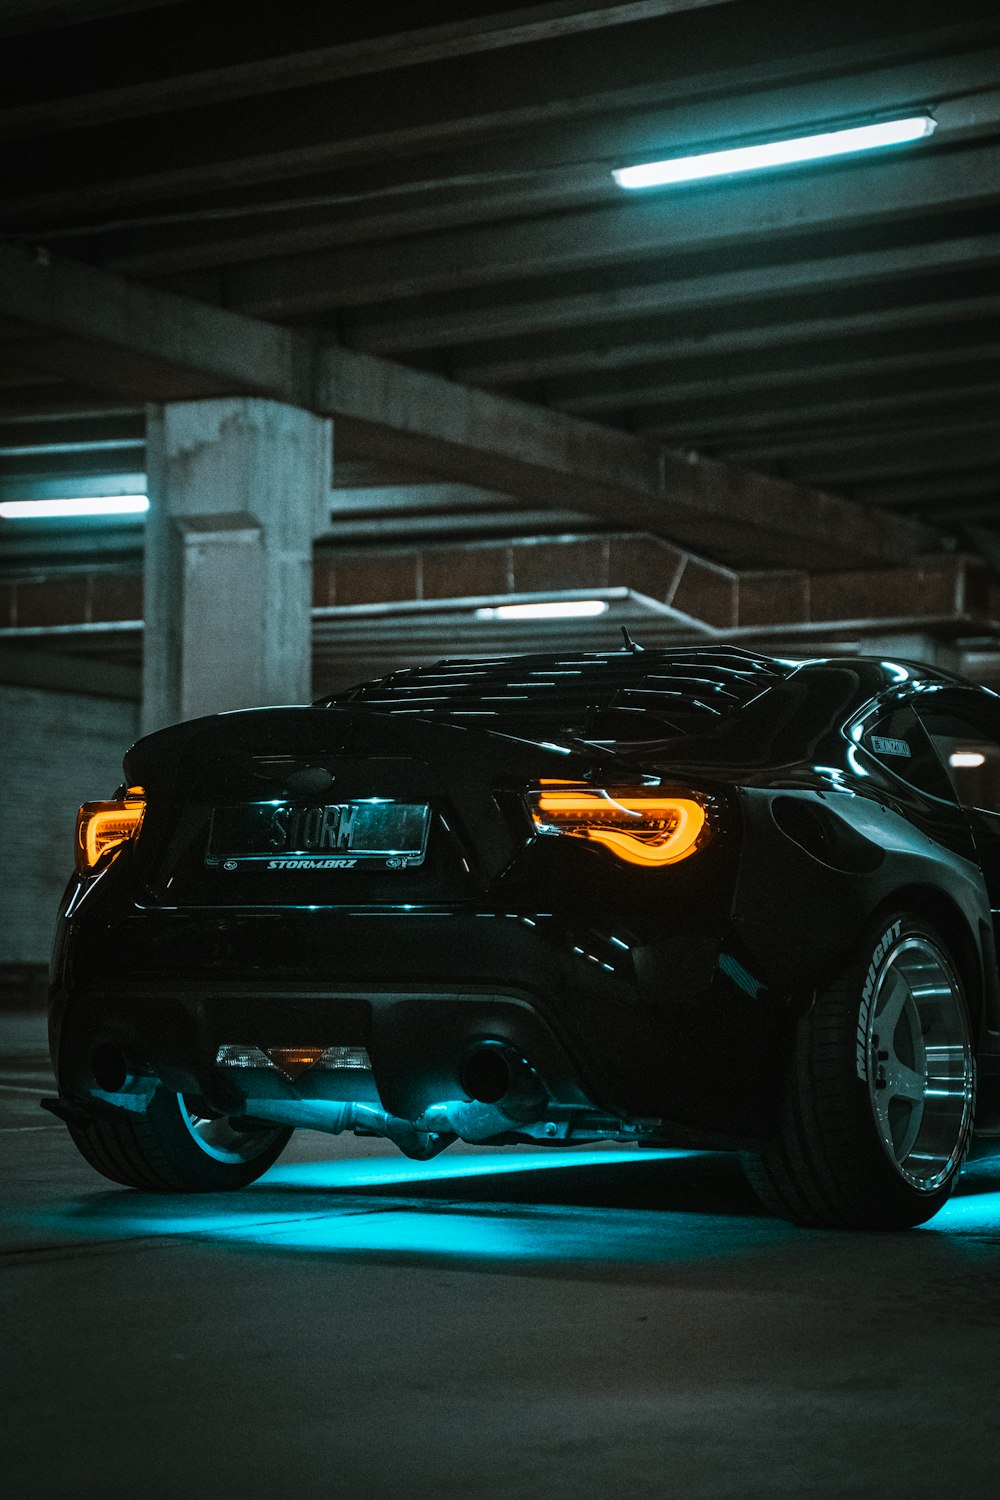 a black sports car parked in a parking garage